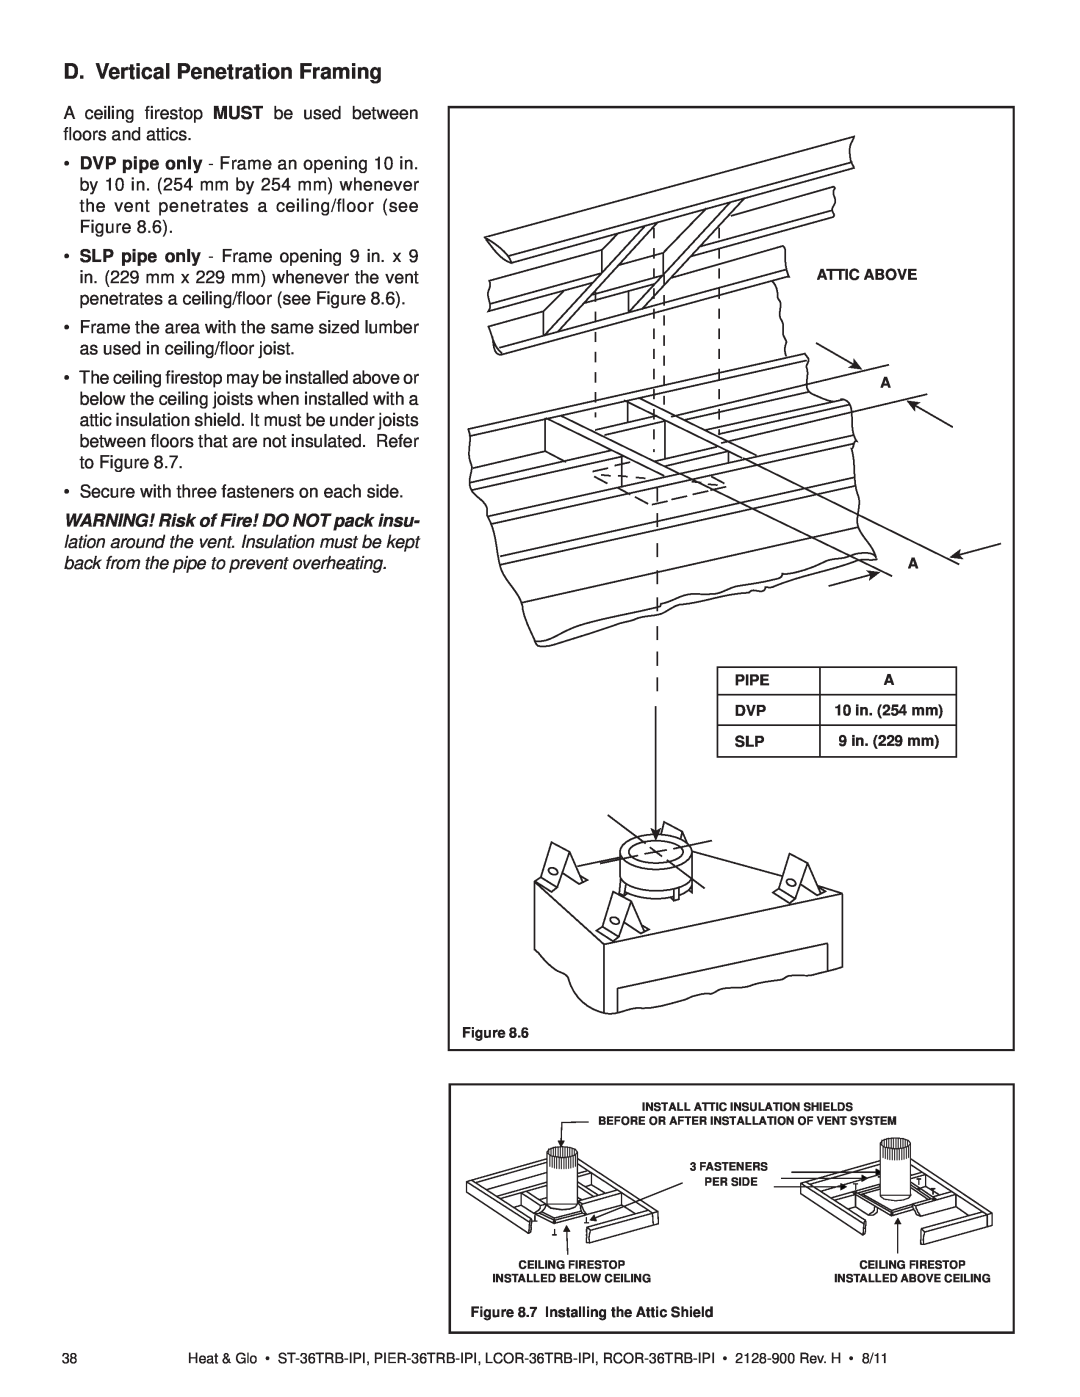 Heat & Glo LifeStyle ST-36TRB-IPI owner manual D. Vertical Penetration Framing 